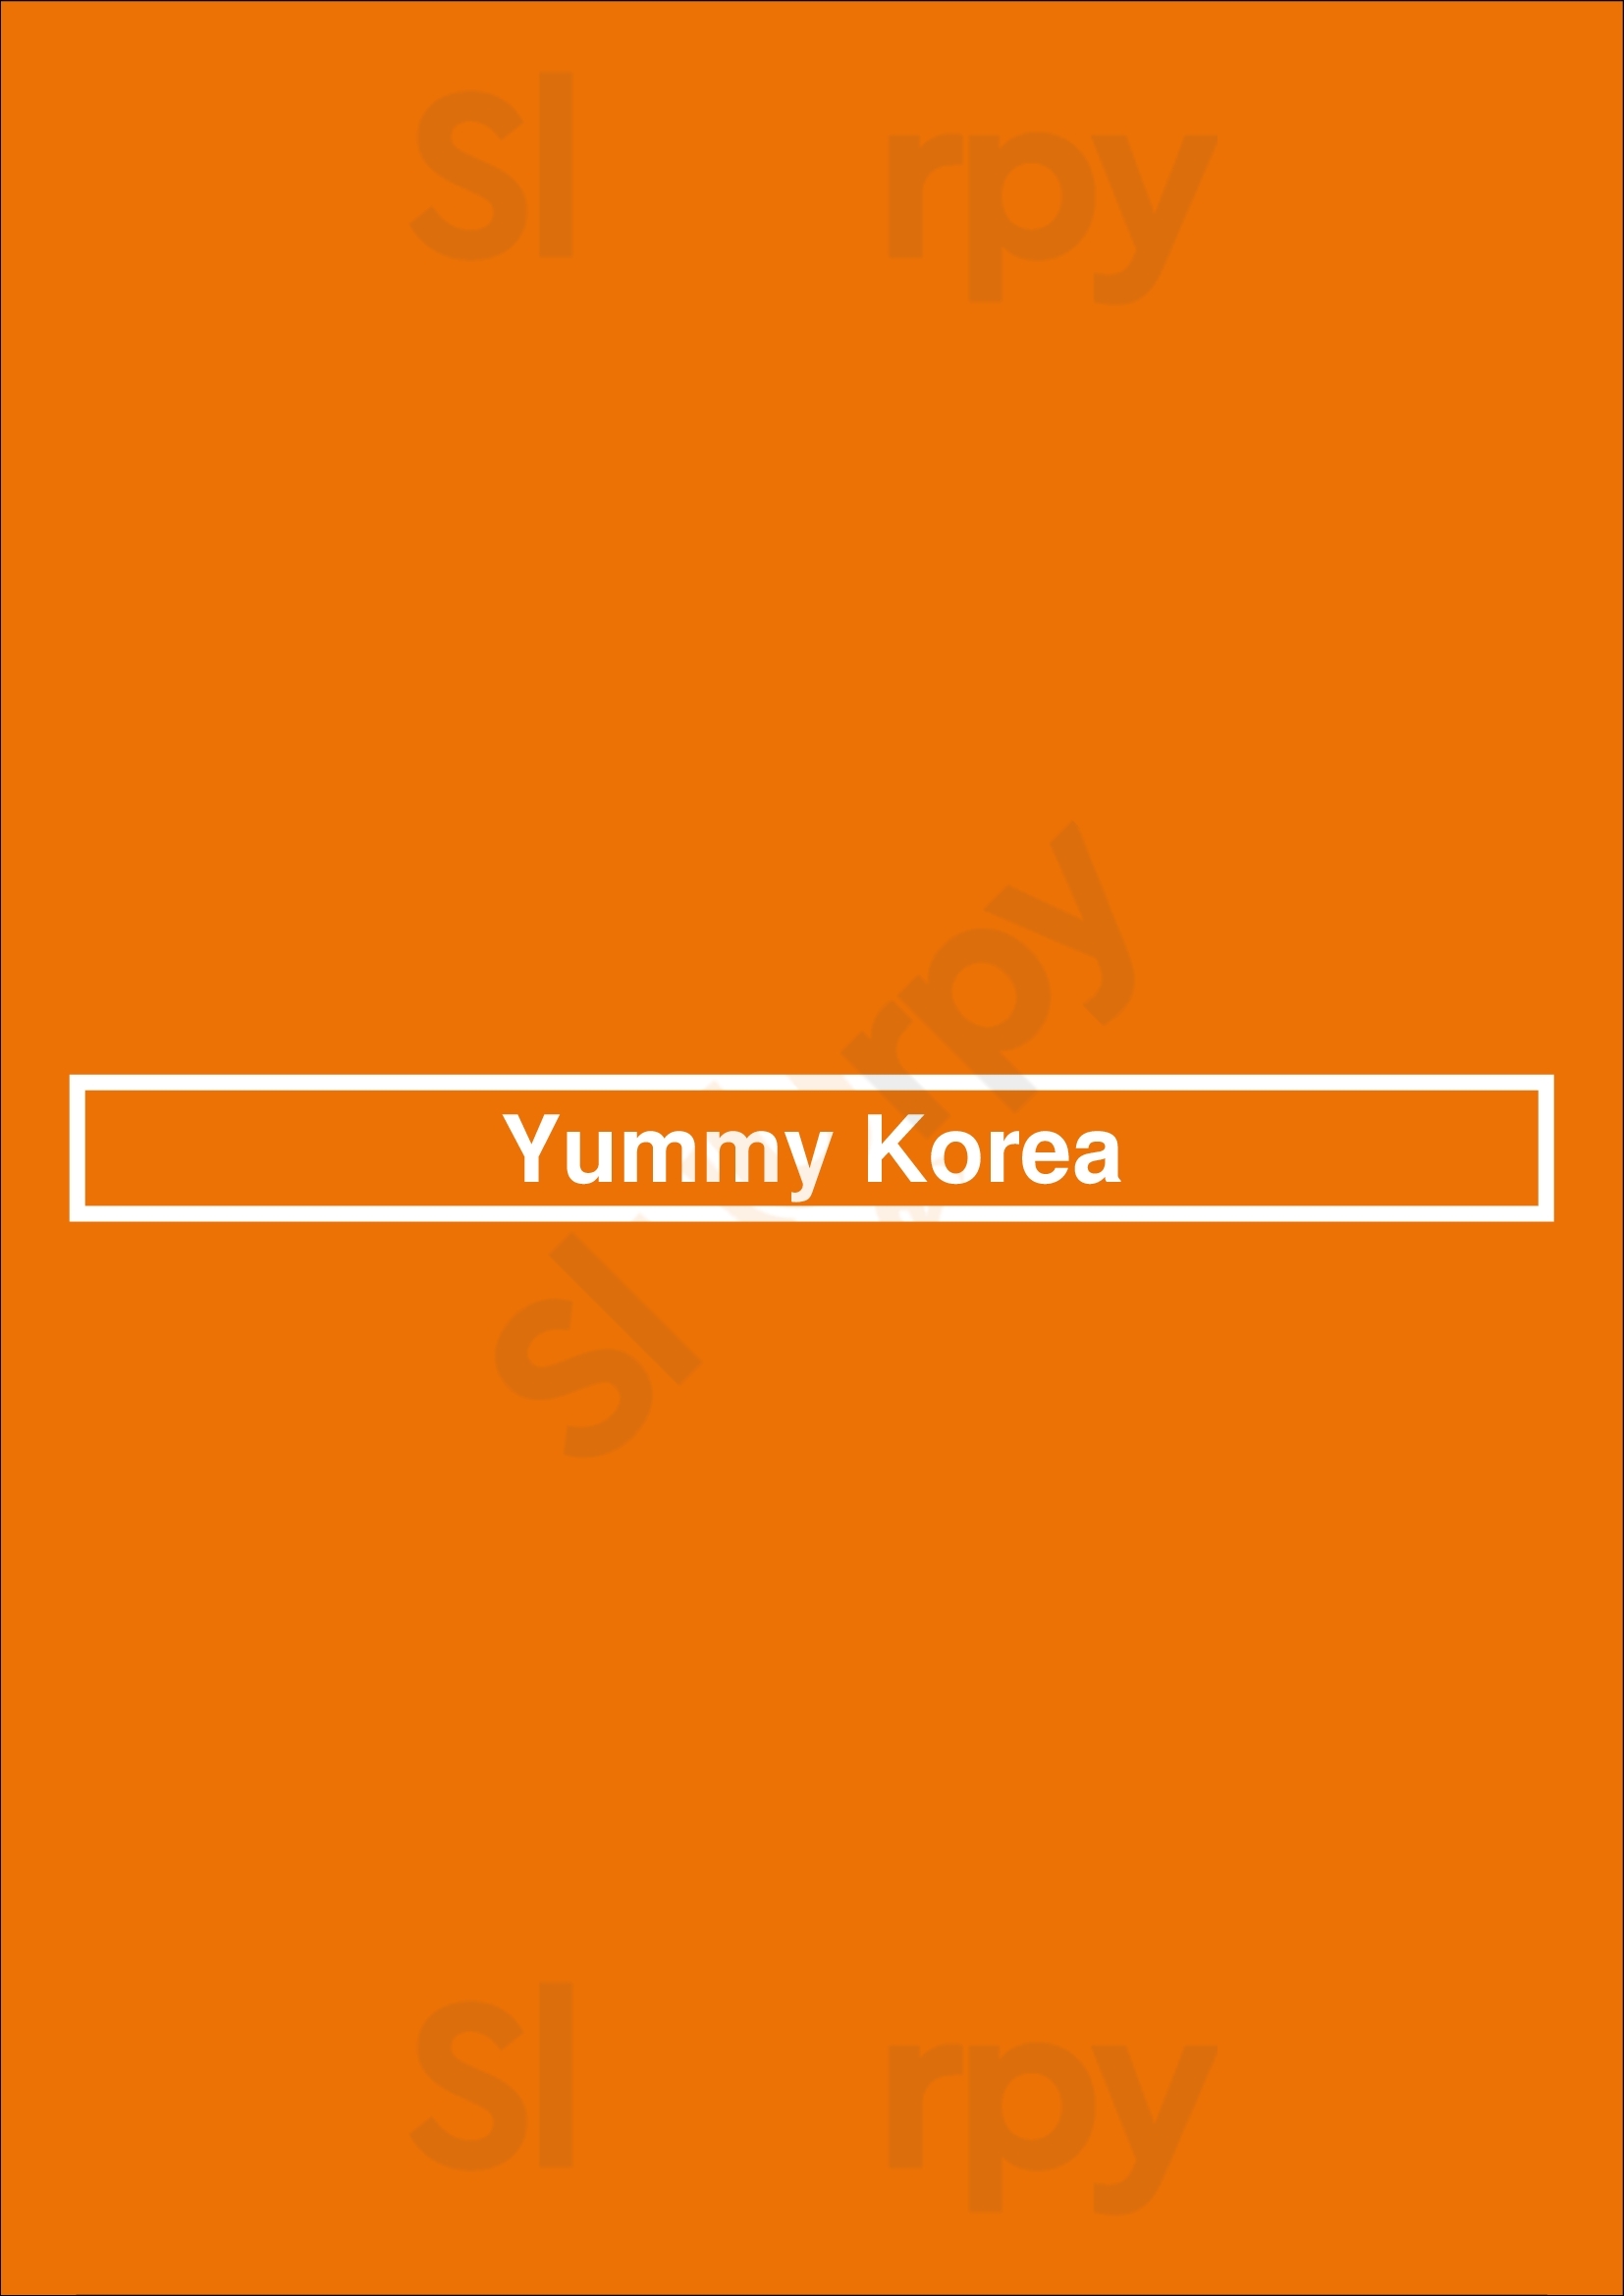 Yummy Korea Richmond Hill Menu - 1